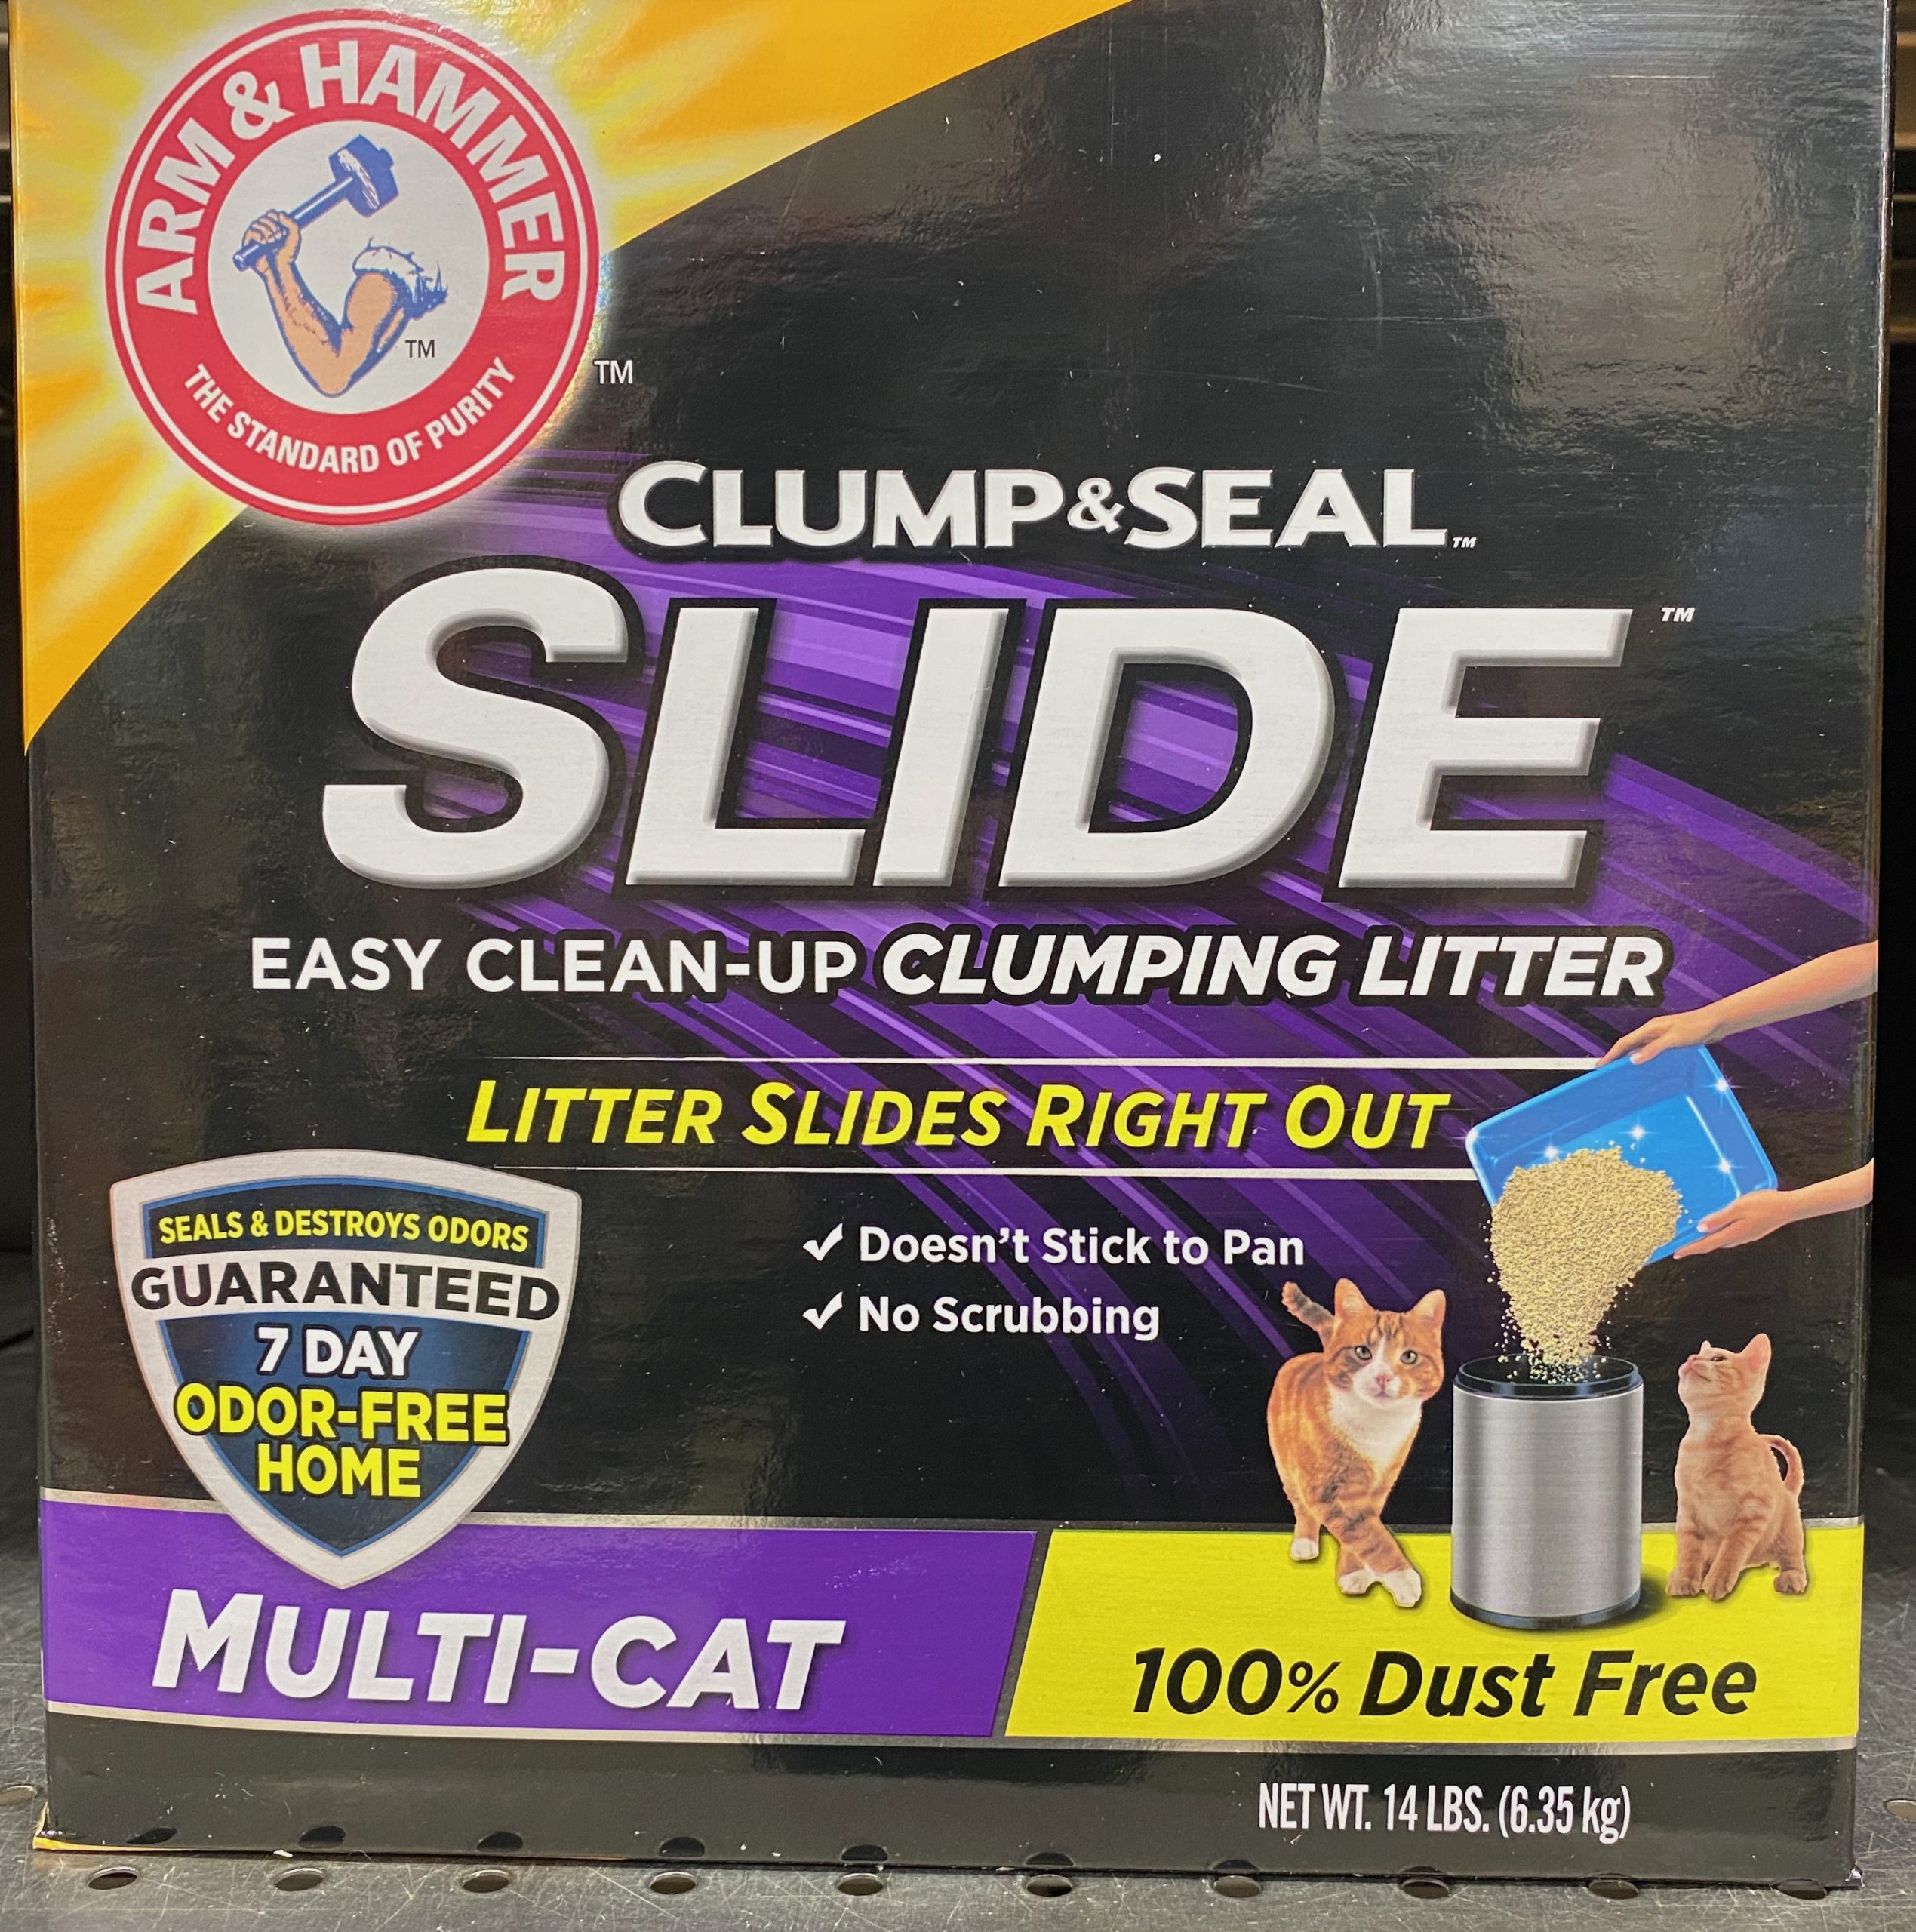 Electric Cat Slide Clump Seal